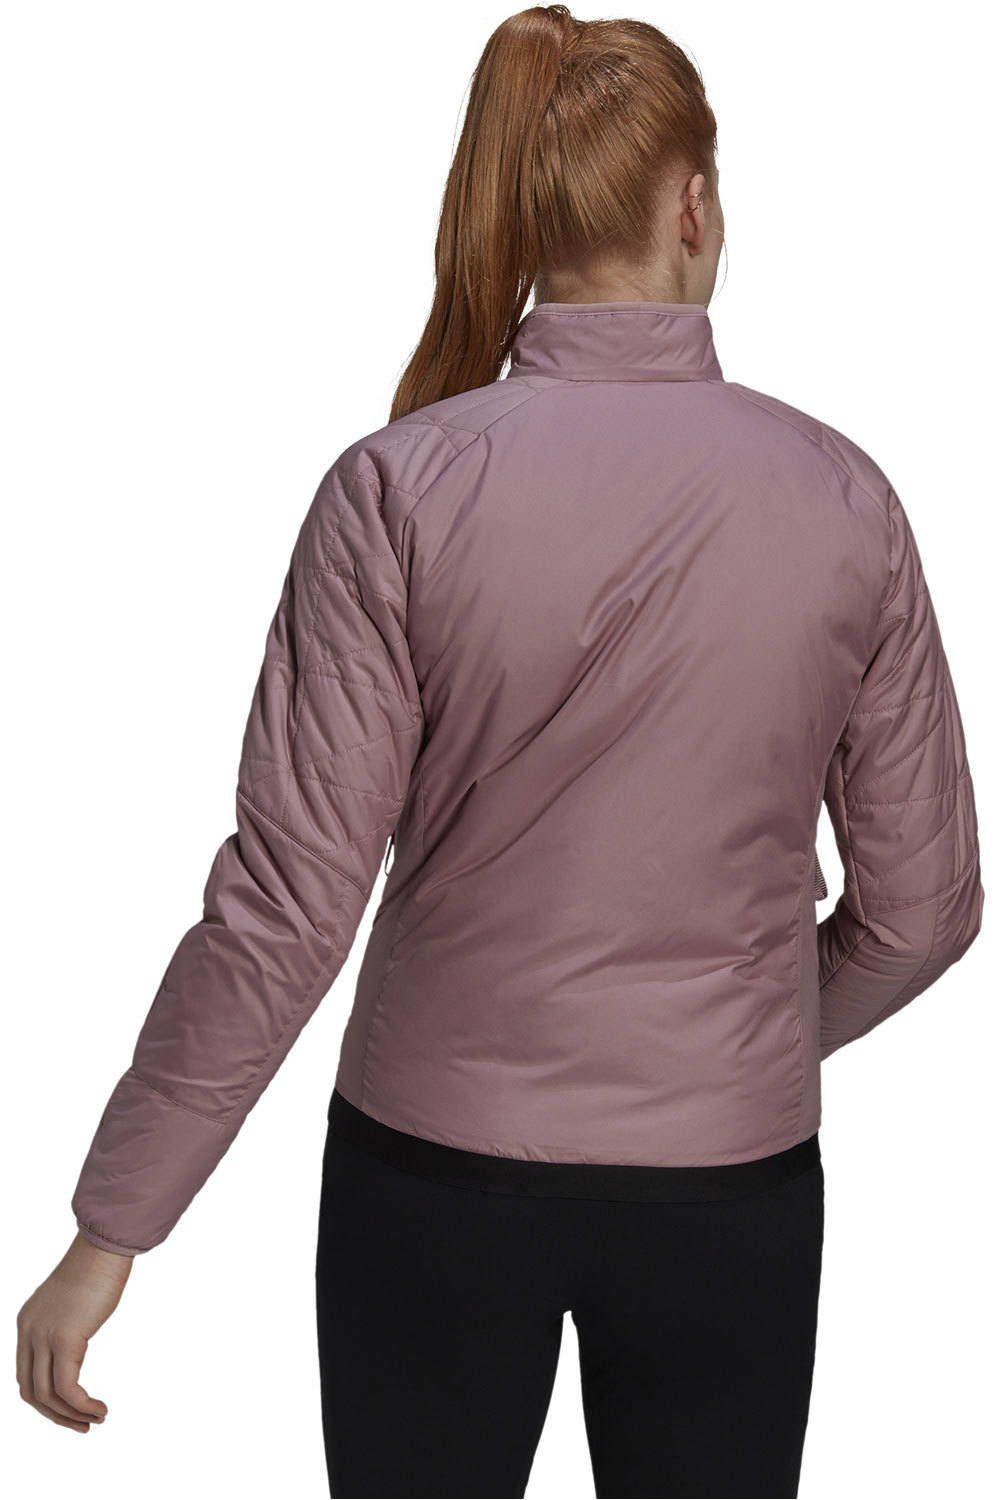 adidas chaqueta outdoor mujer Terrex Multi Synthetic Insulated vista trasera